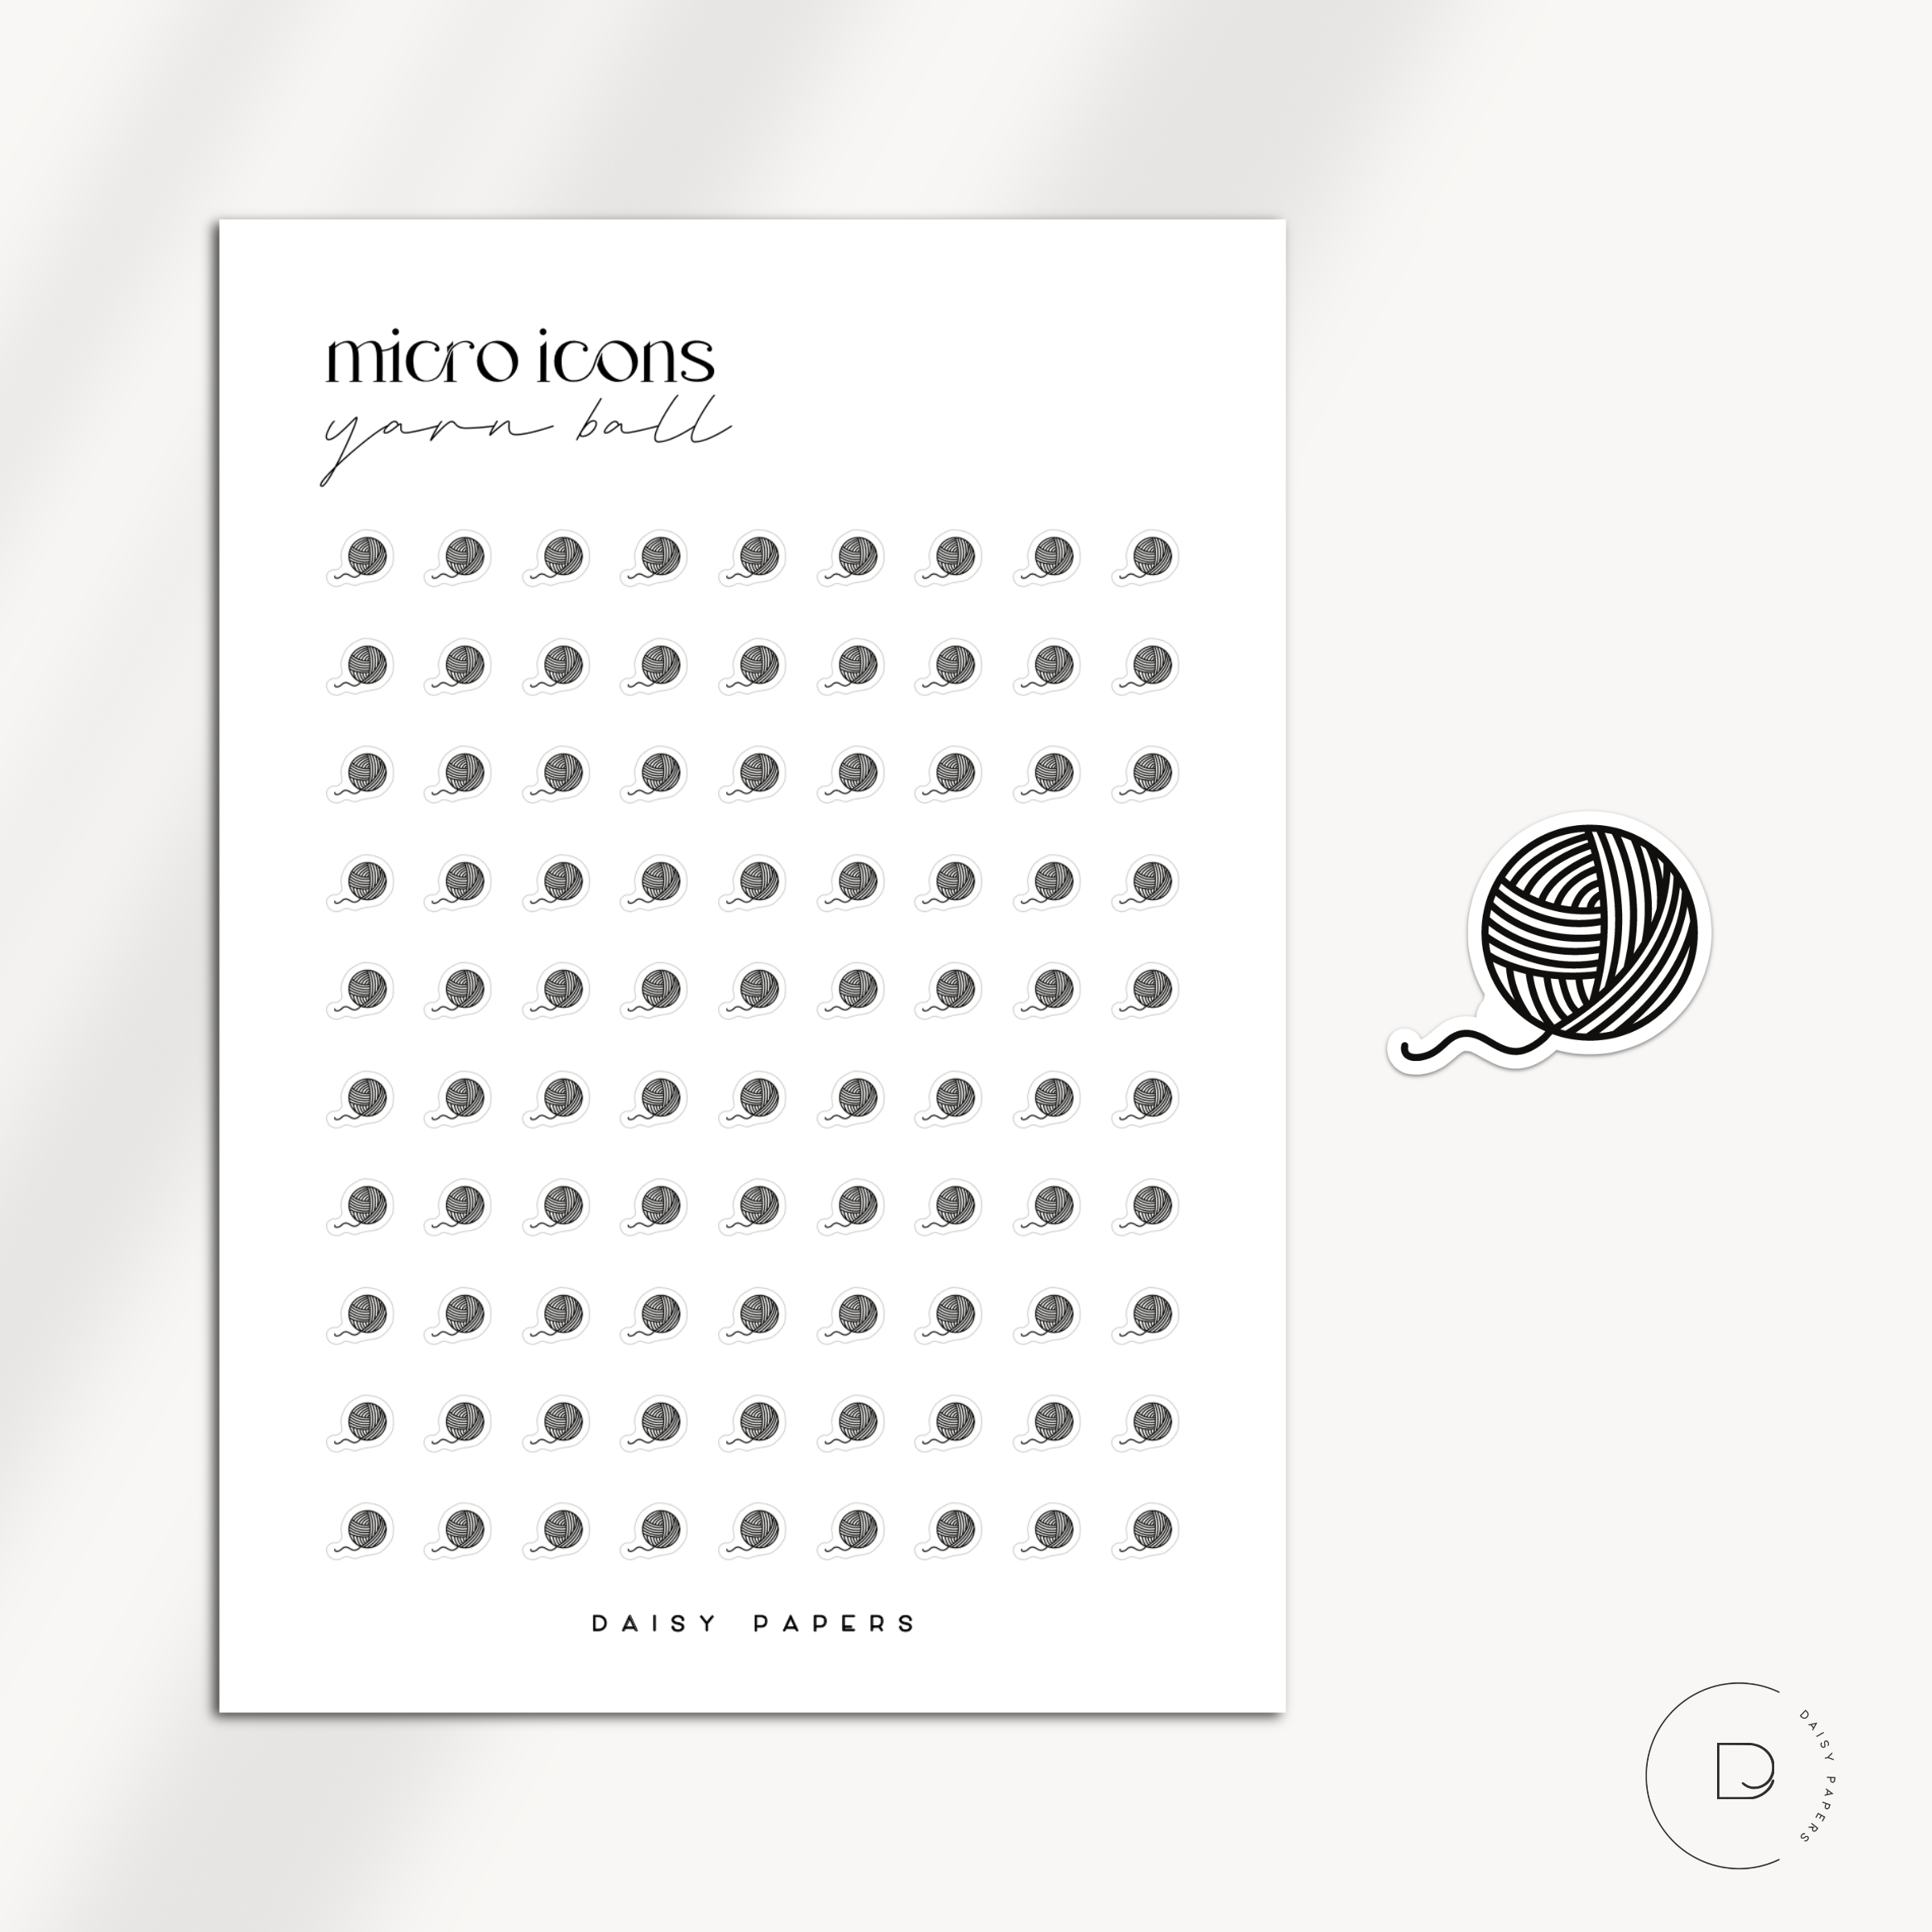 MICRO ICONS - YARN BALL